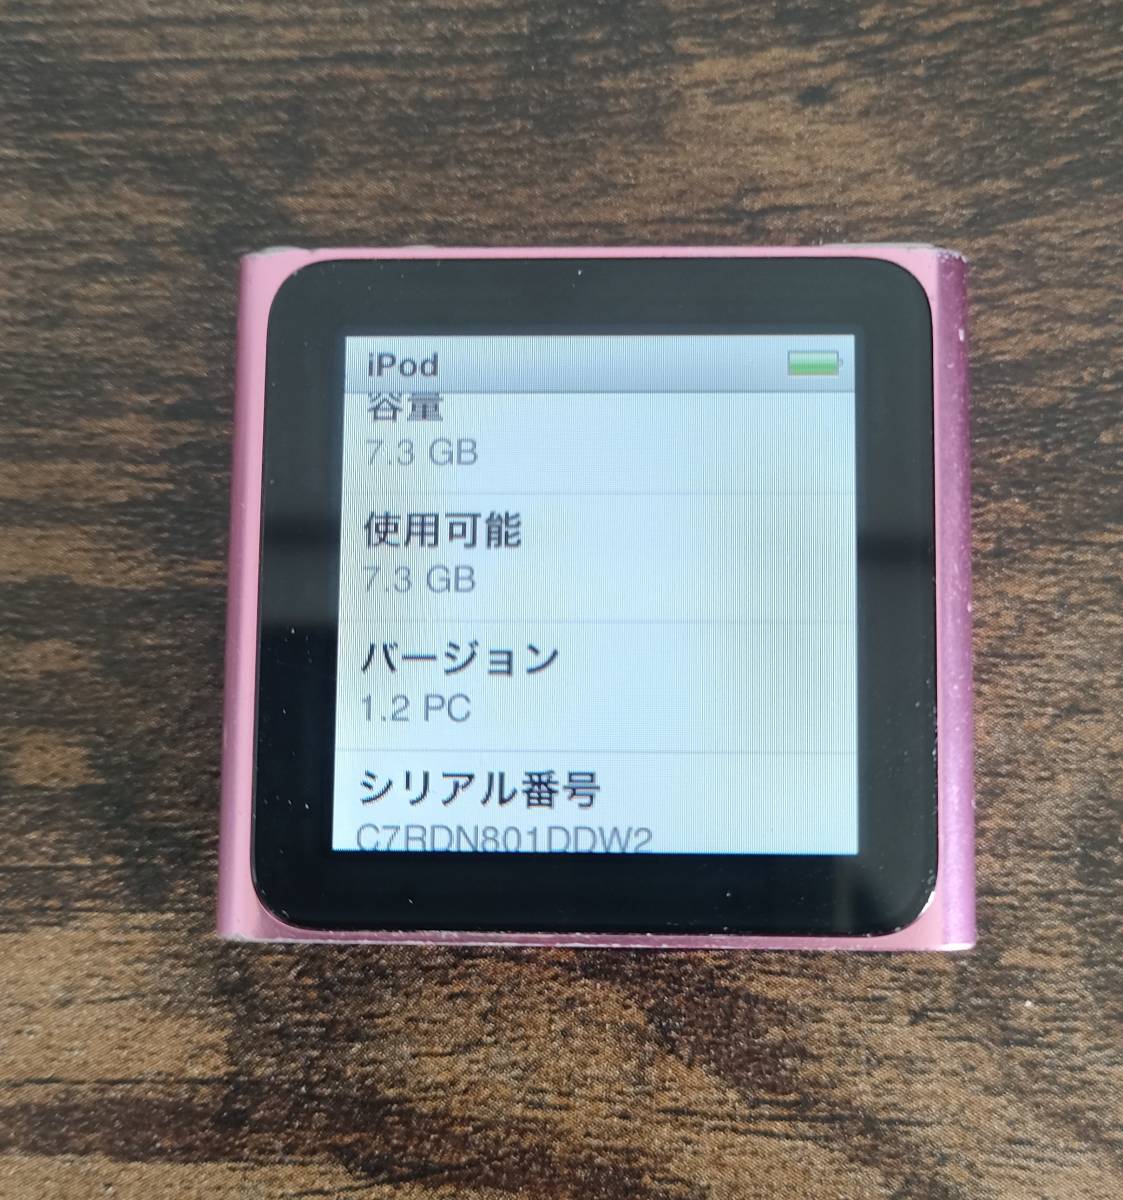 Apple iPod nano アイポッドナノ 第6世代 8G A1366 ピンク ケーブル付き